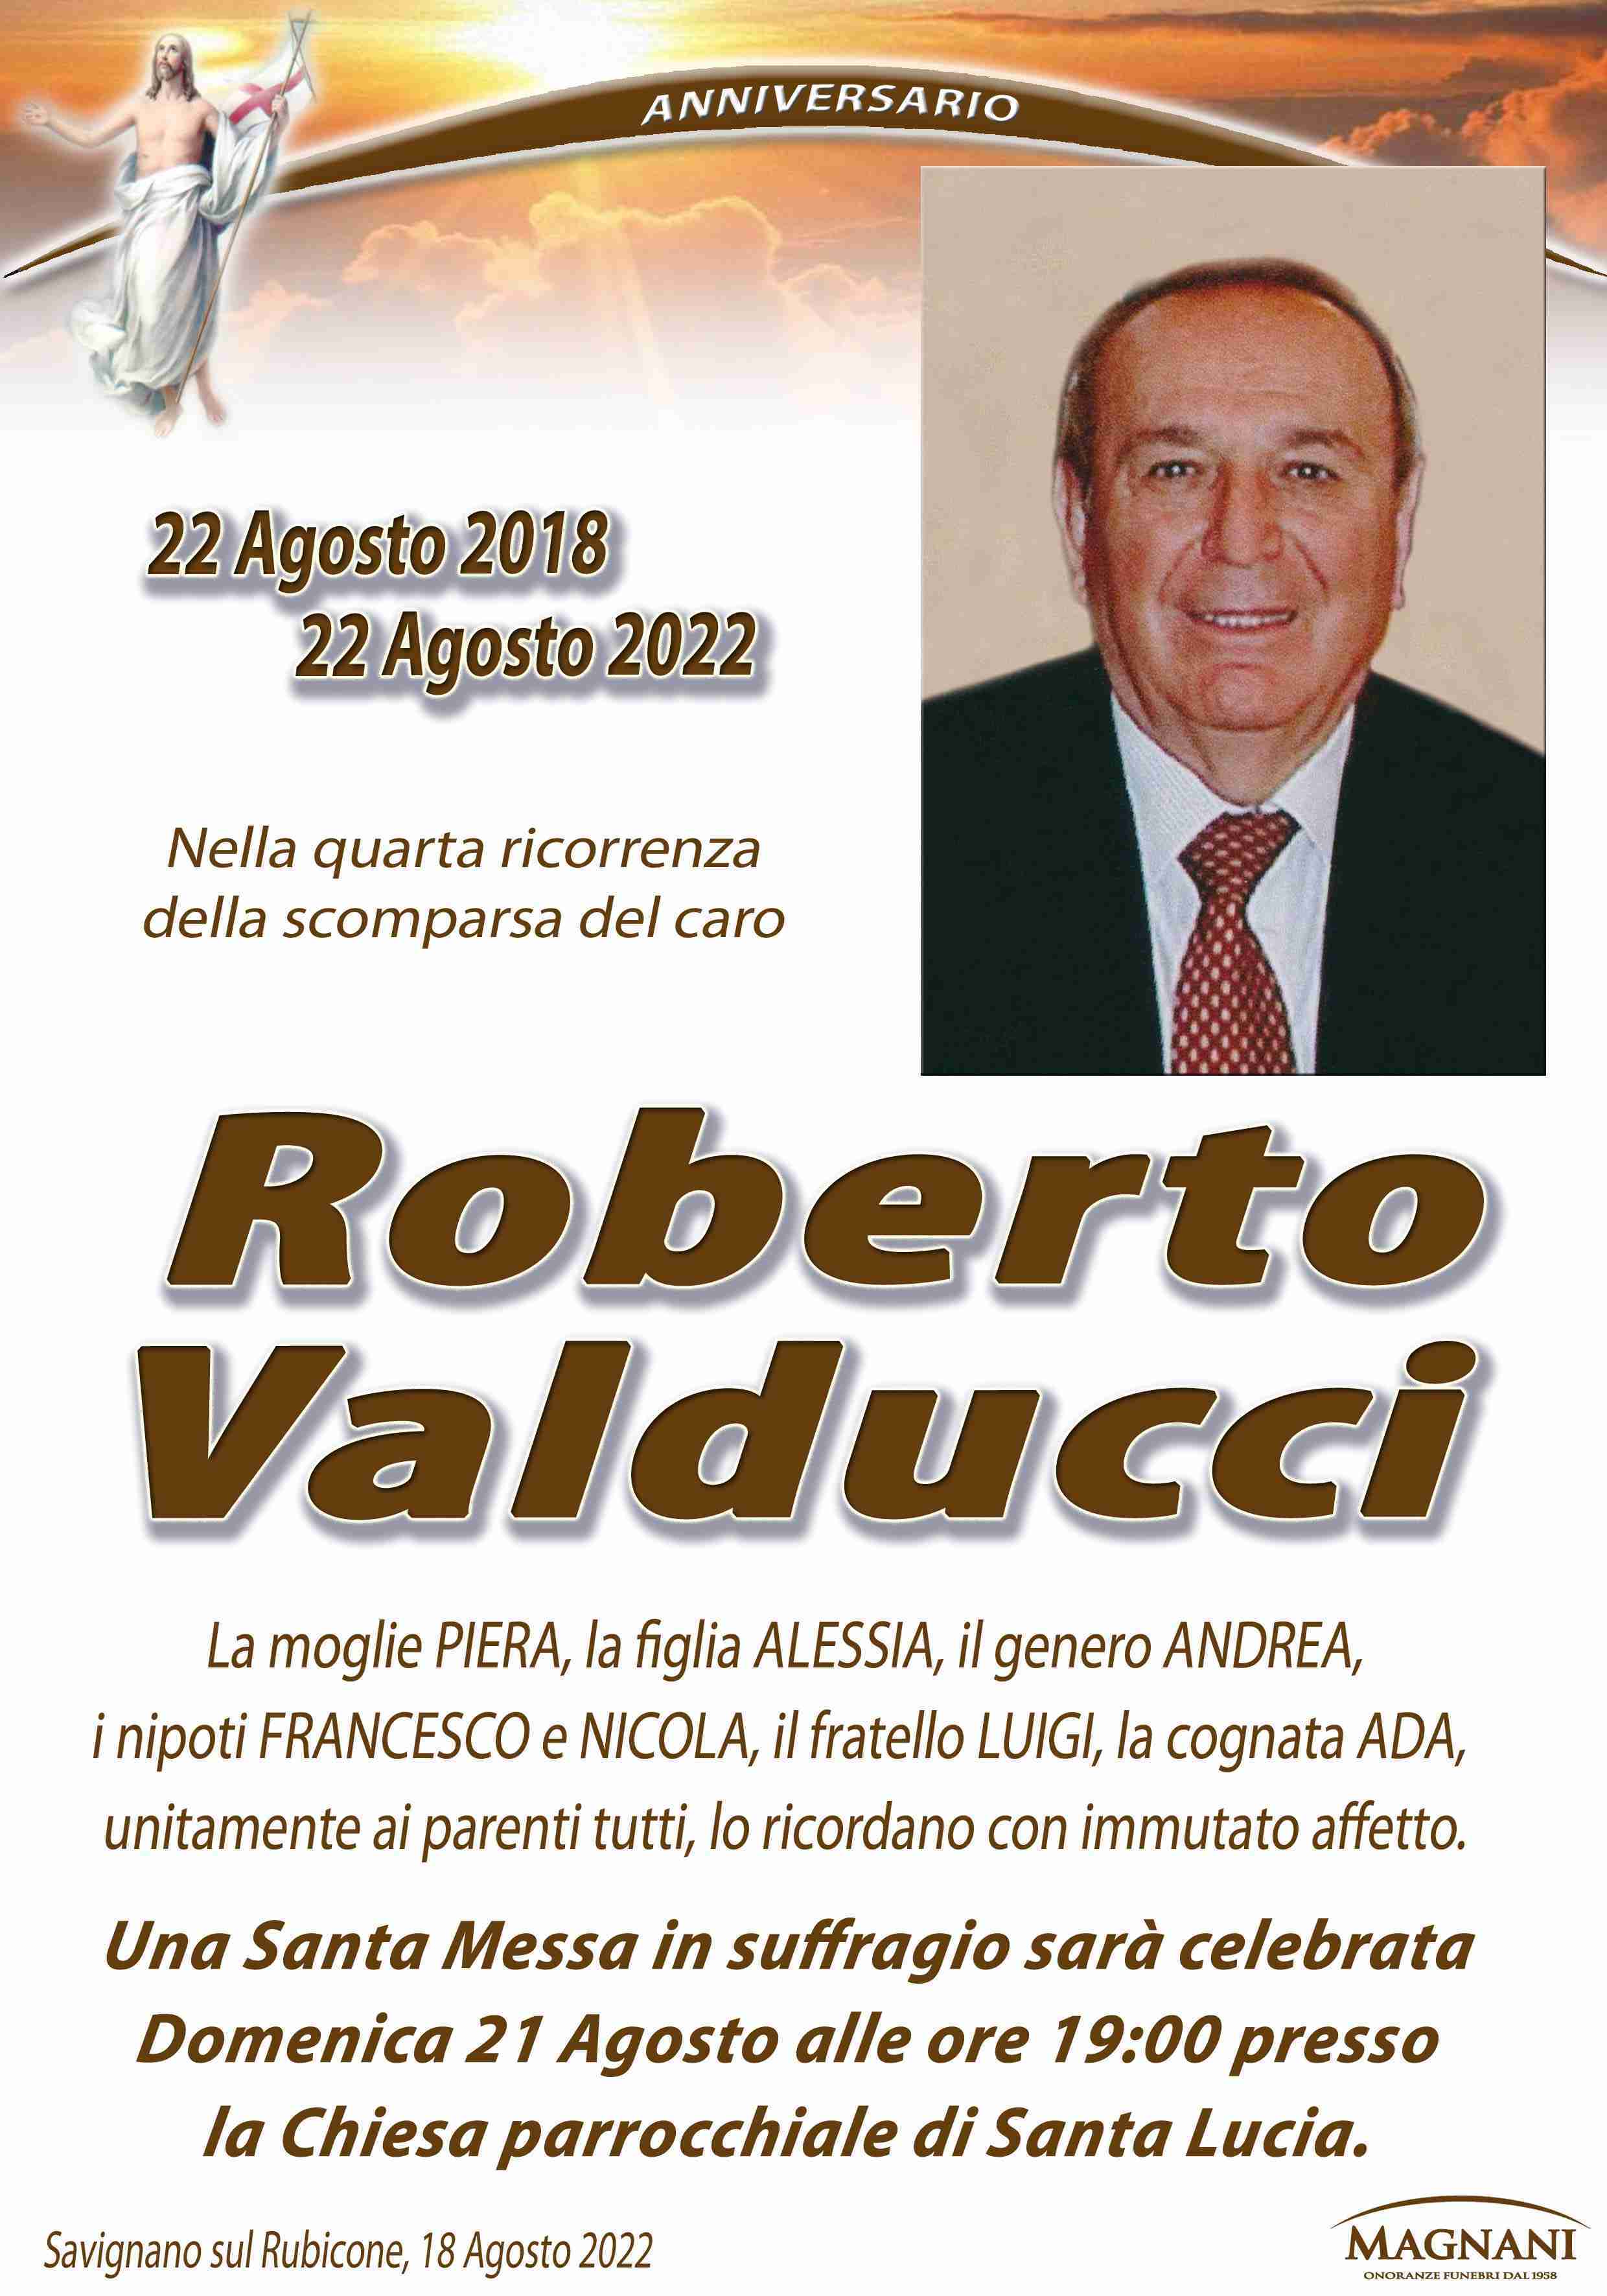 Roberto Valducci